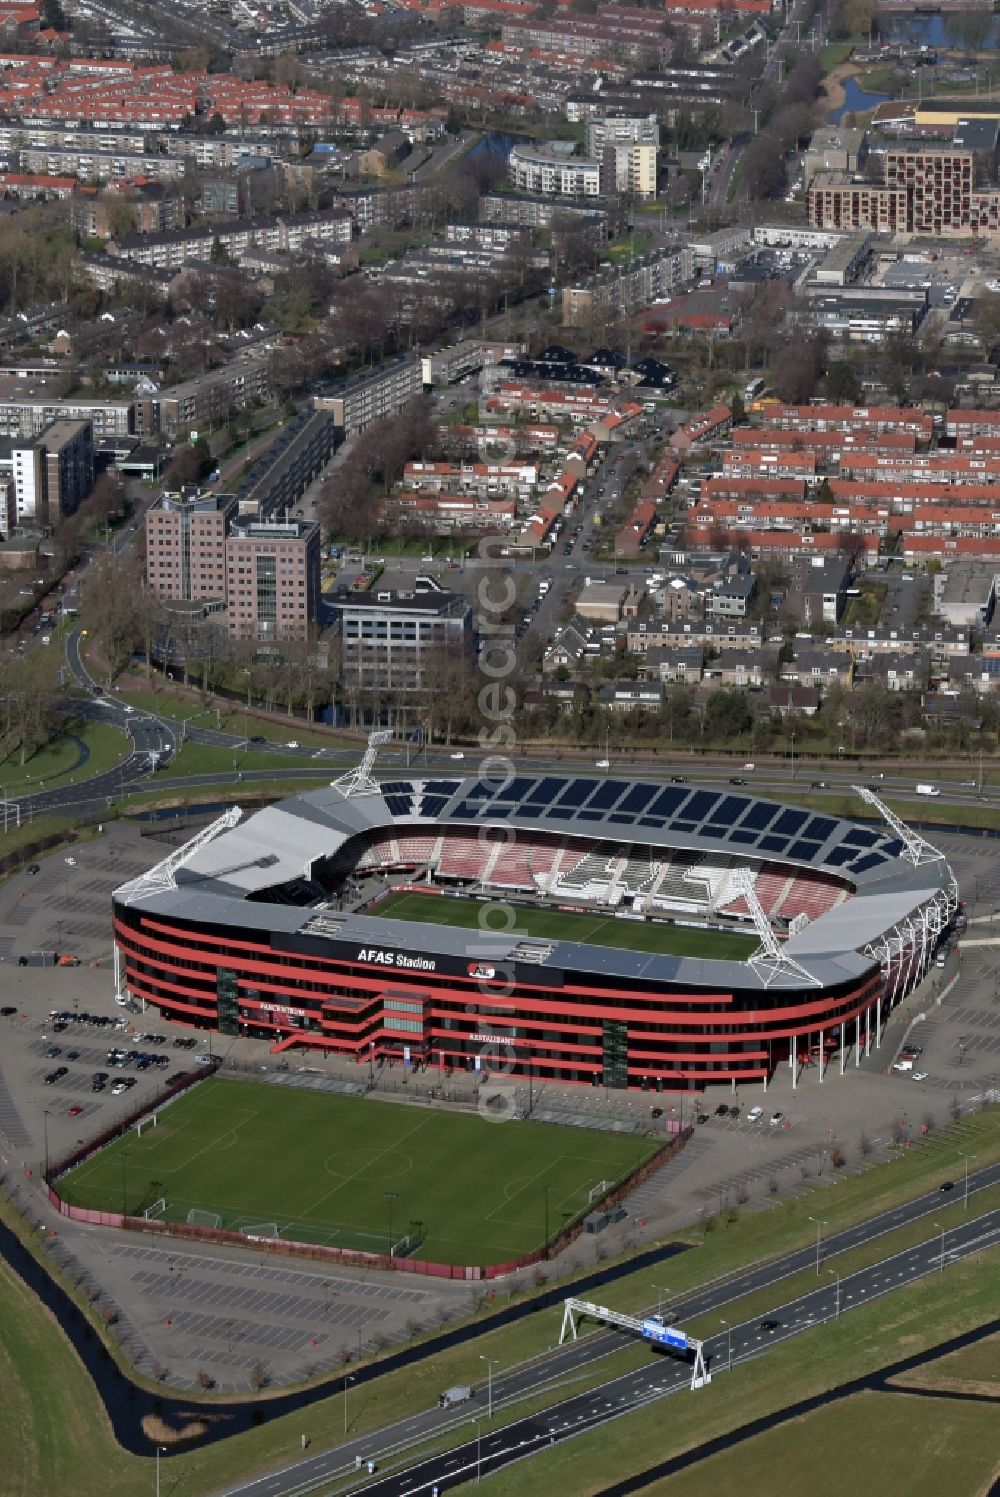 Alkmaar from the bird's eye view: Sports facility grounds of the Arena stadium AFAS AZ Stadion on Stadionweg in Alkmaar in Noord-Holland, Netherlands